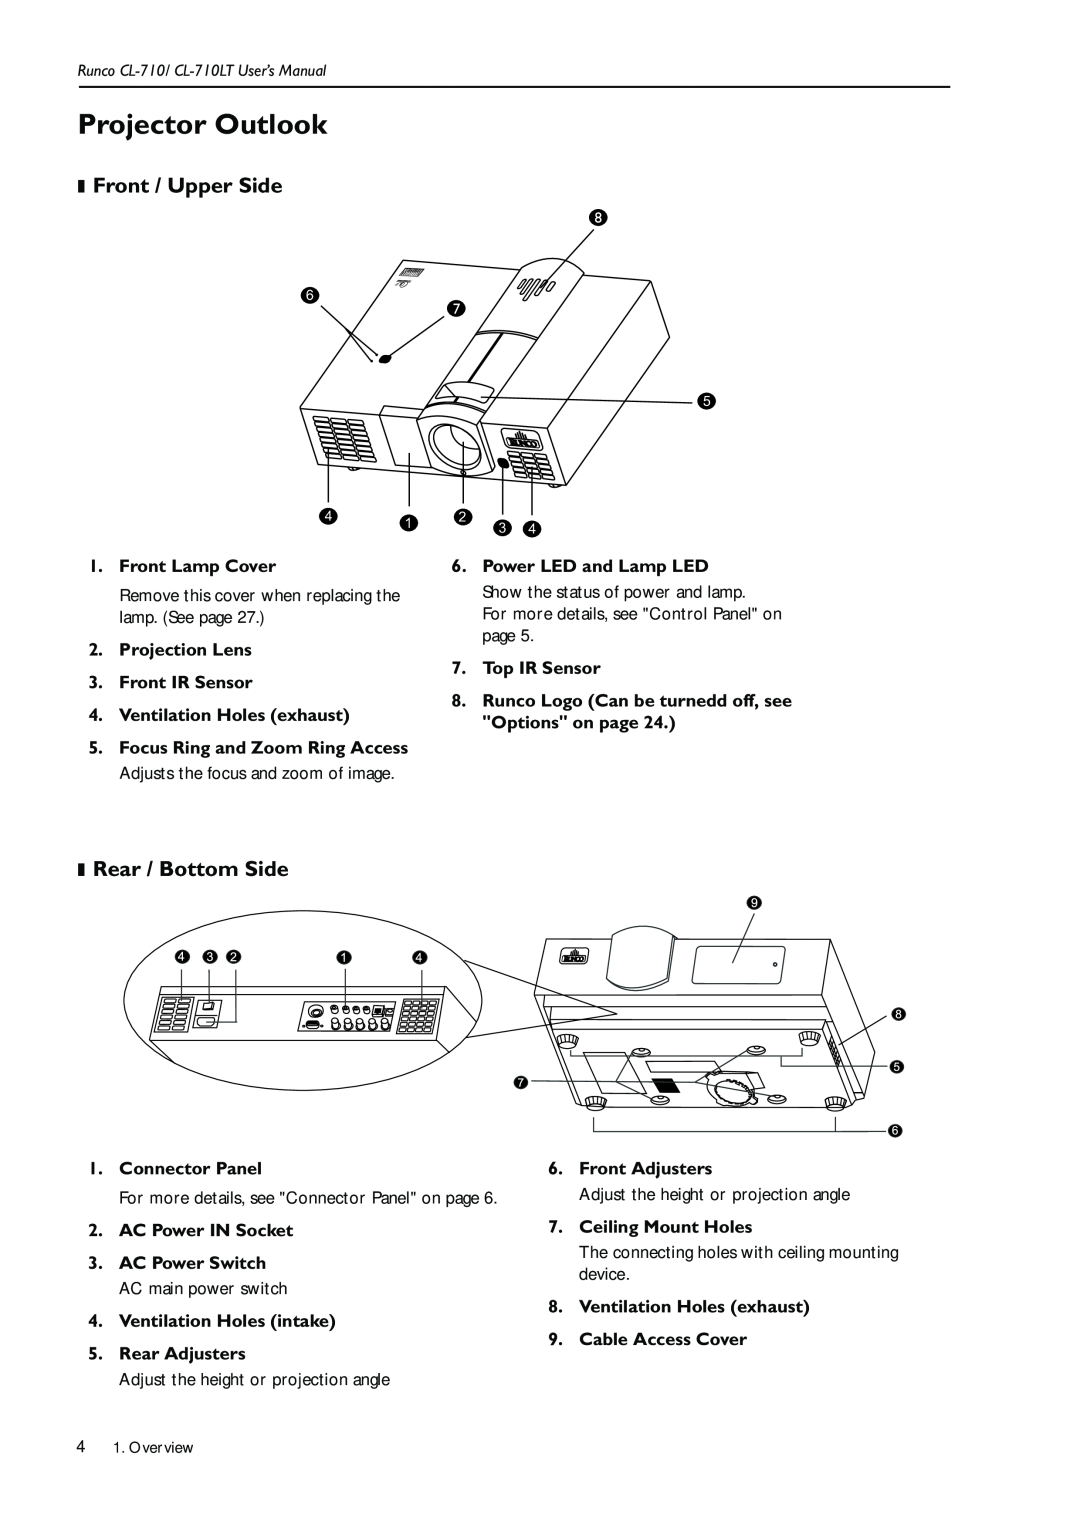 Runco CL-710LT, Reflection manual Projector Outlook, Front / Upper Side, Rear / Bottom Side 